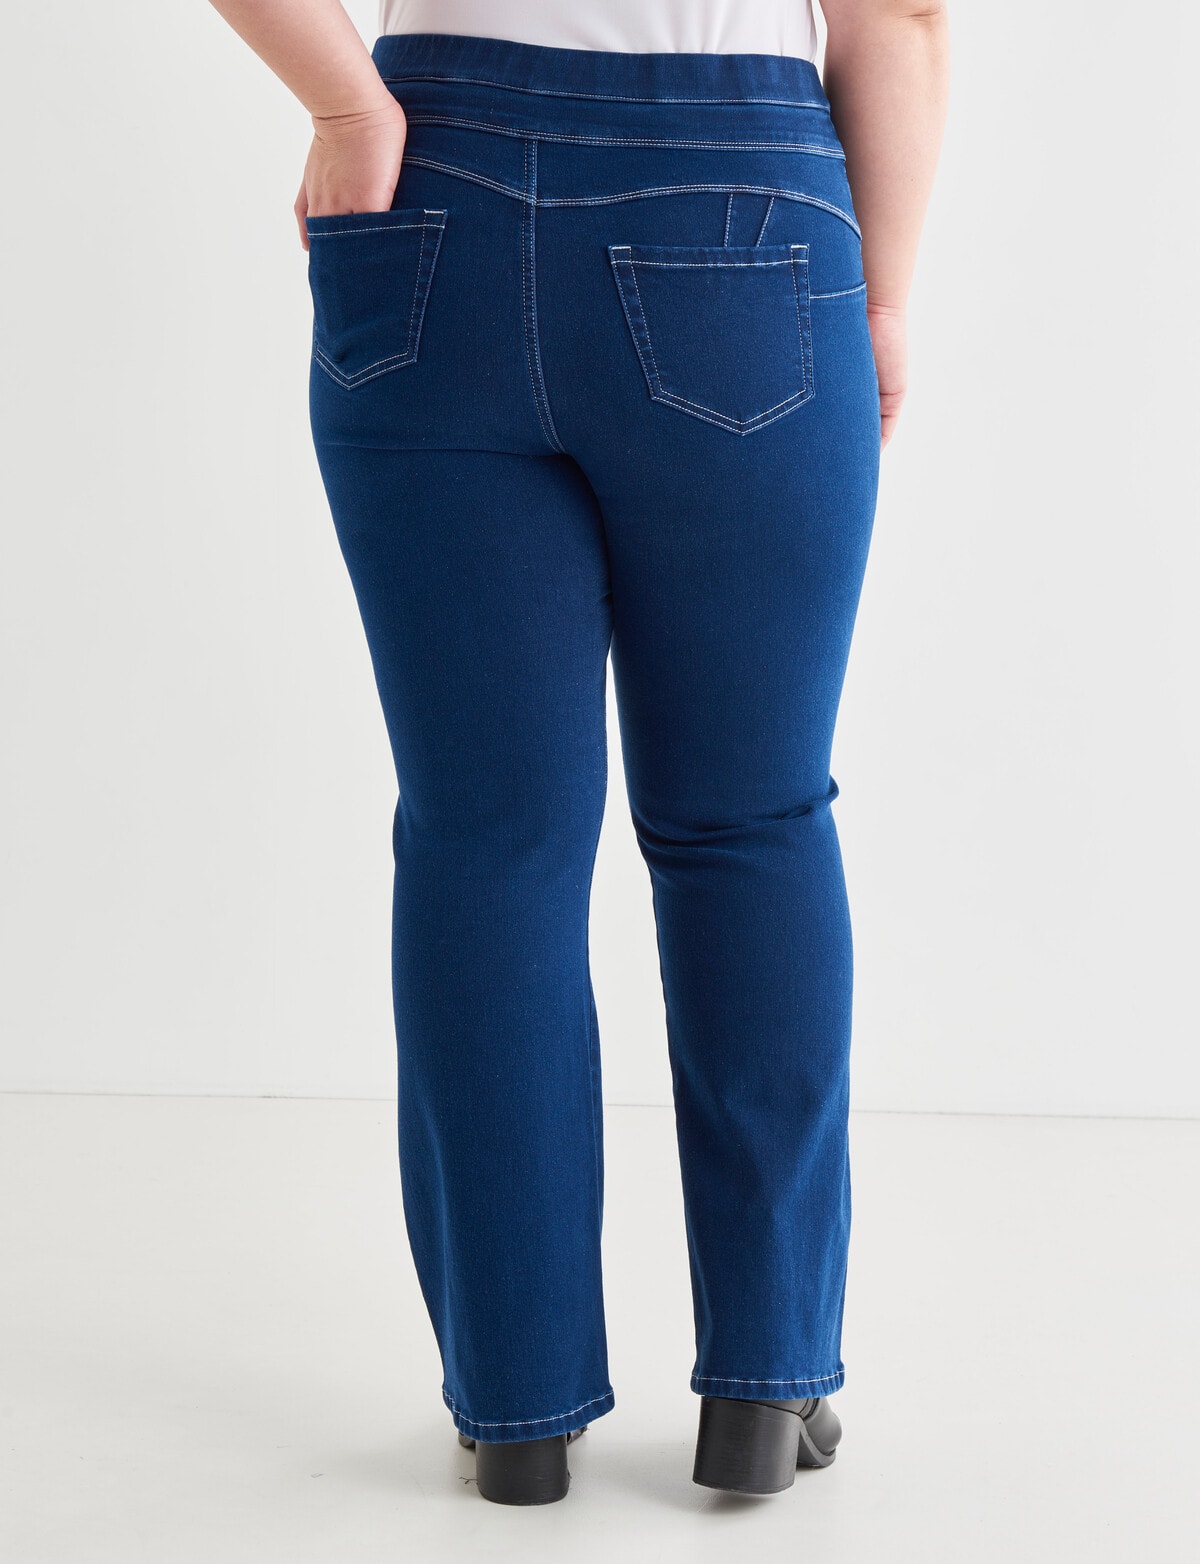 Denim Republic Curve Pull on Bootleg Jean, Dark Wash - Jeans, Pants & Shorts